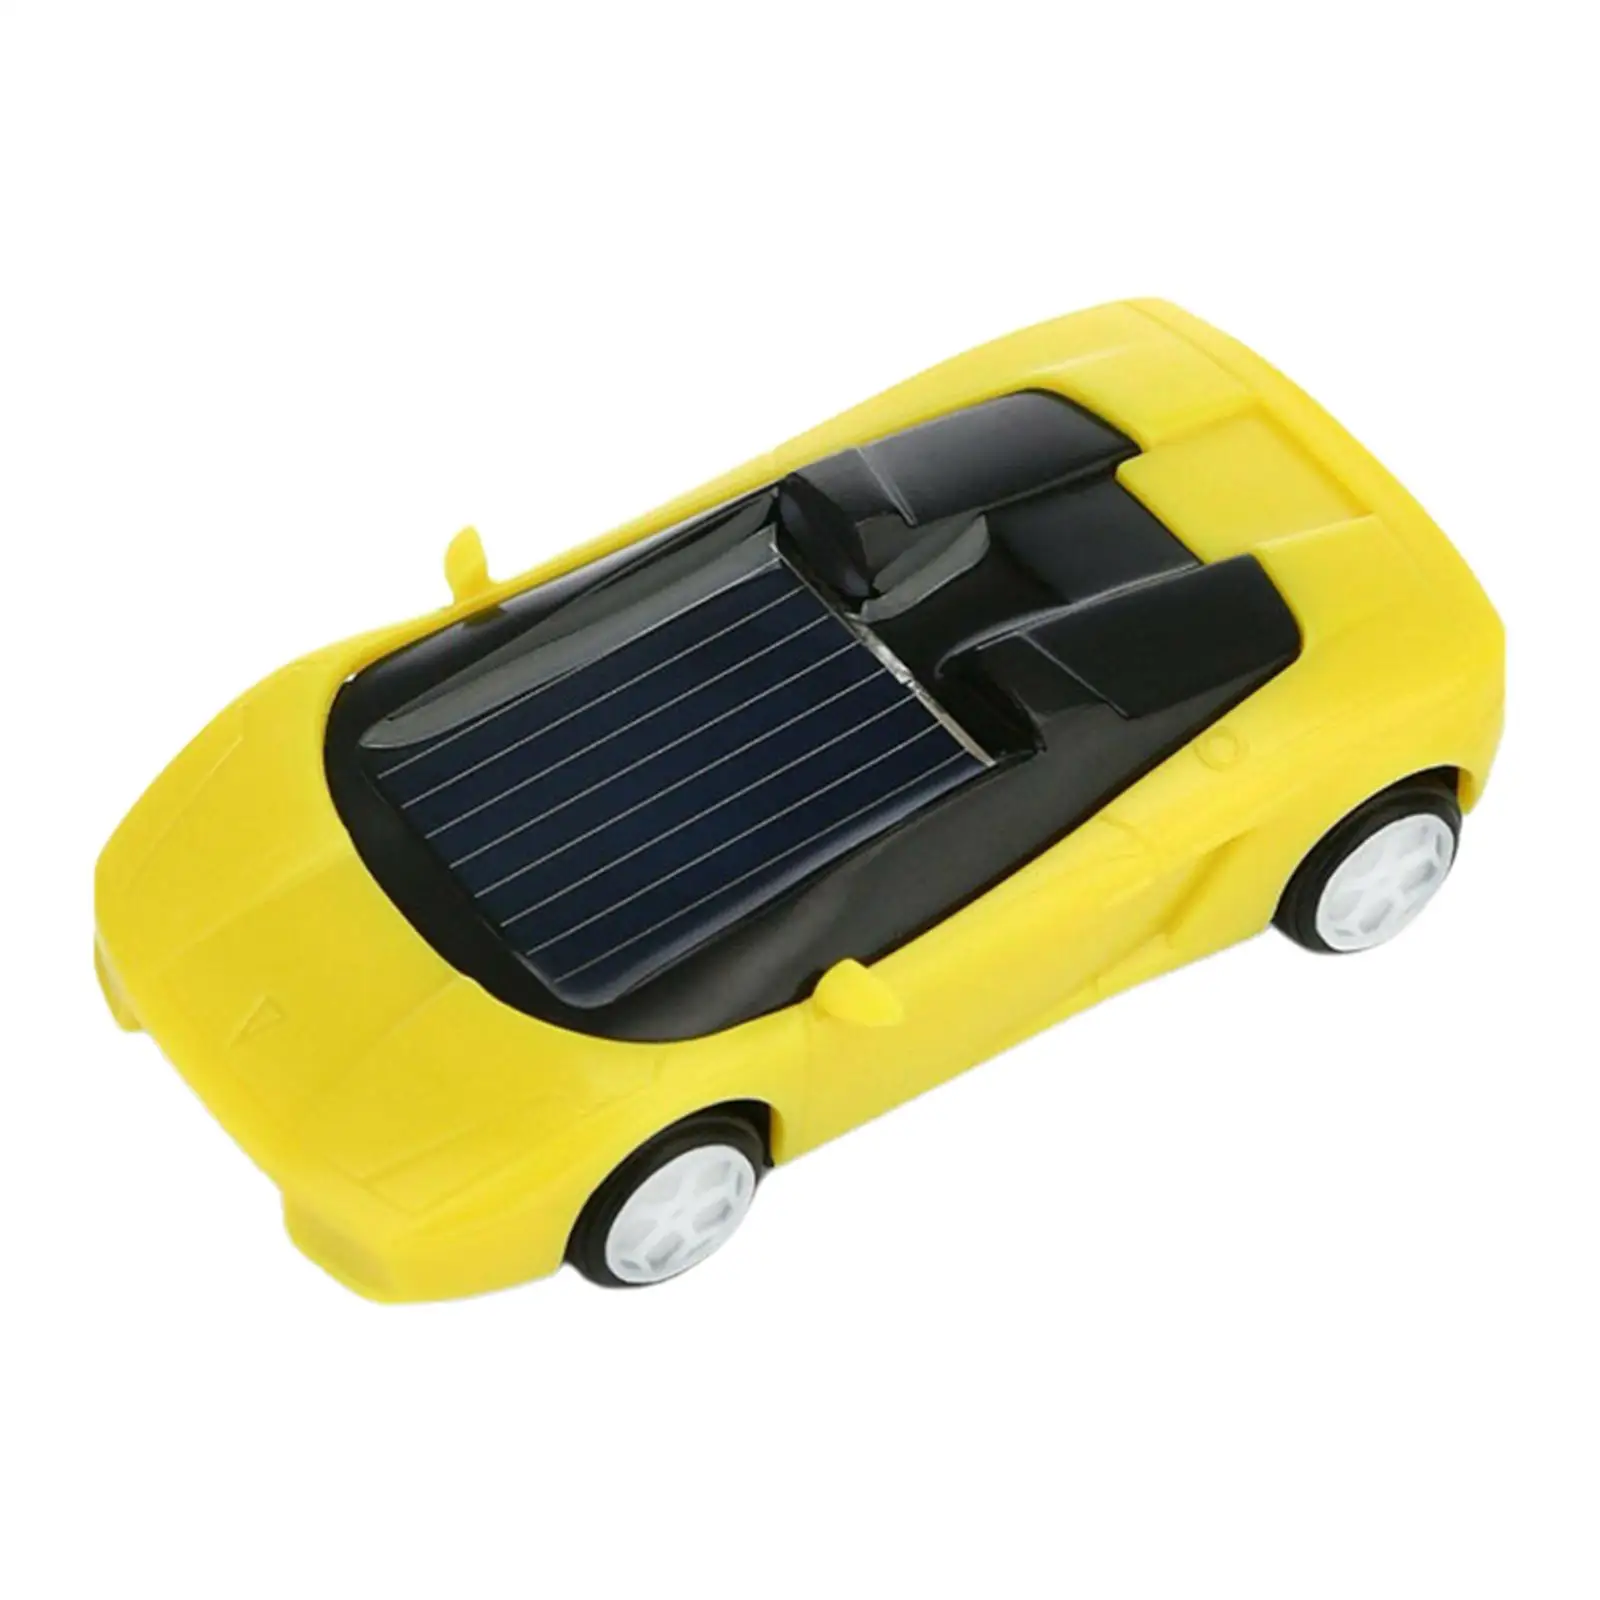 1 Piece Mini Plastic Portable Gadget Multifunction Collectible Vehicle Smallest